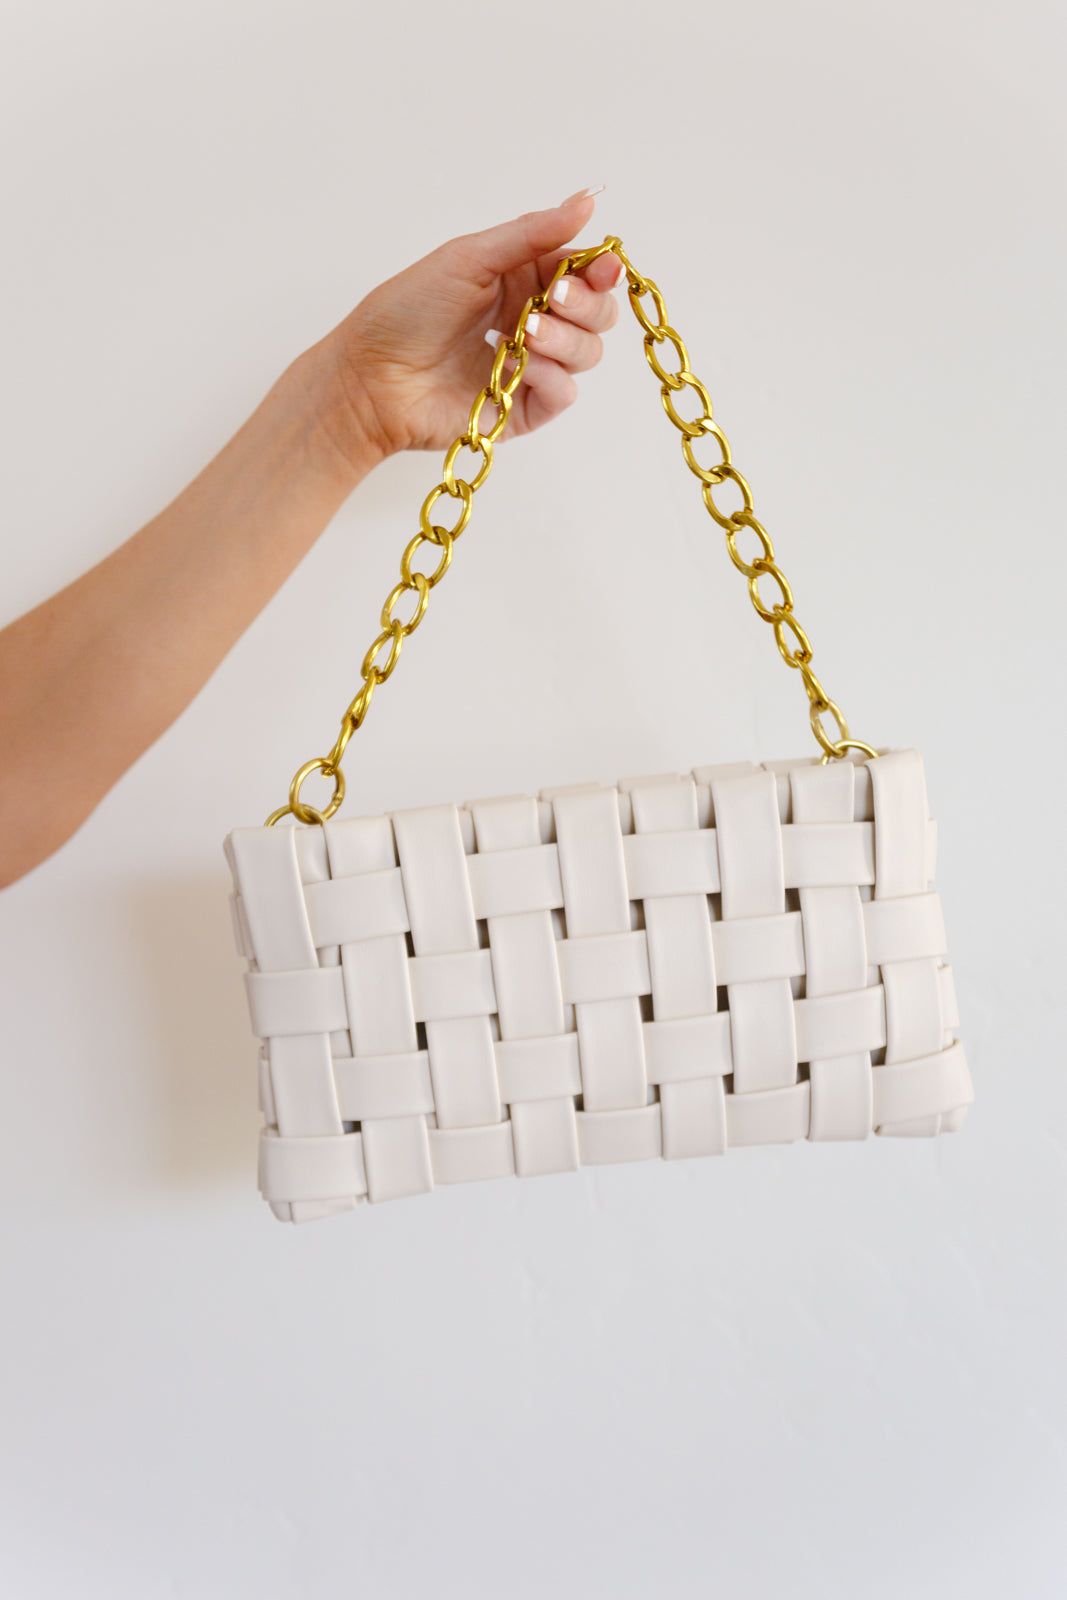 Forever Falling Handbag in Cream - WEBSITE EXCLUSIVE